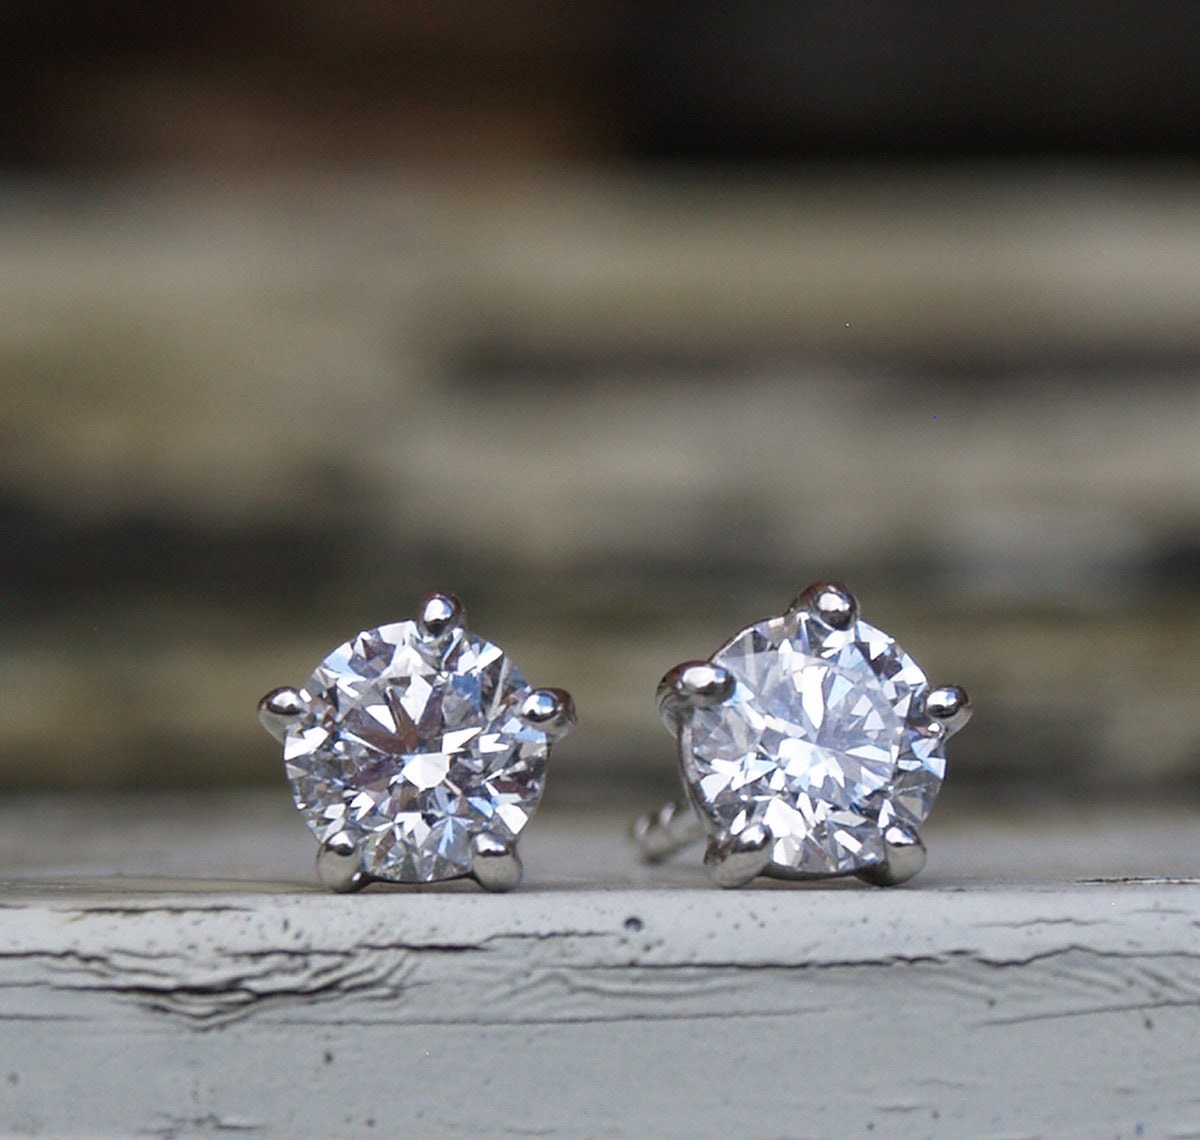 White Platinum Diamond Earring at Best Price in Roorkee | Titan Industries  Ltd.